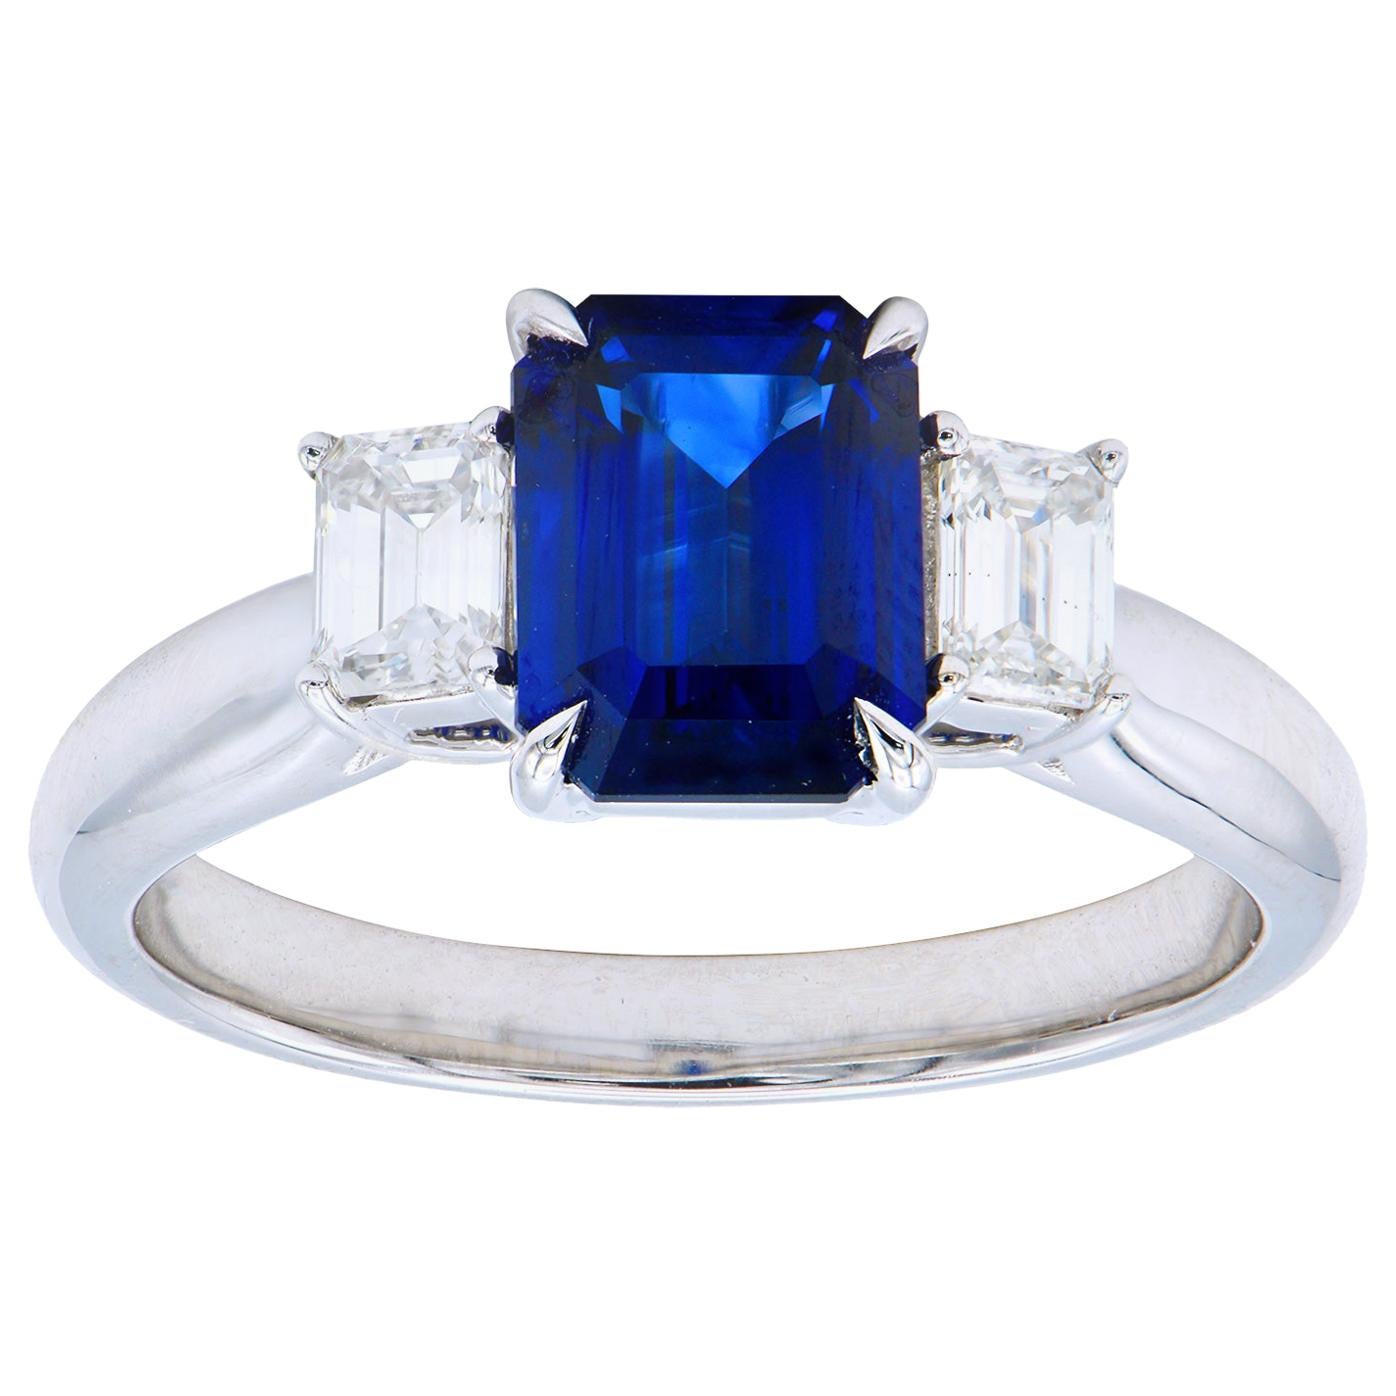 1.85 Carat Emerald Cut Sapphire Ring with Emerald Diamond Side Stones